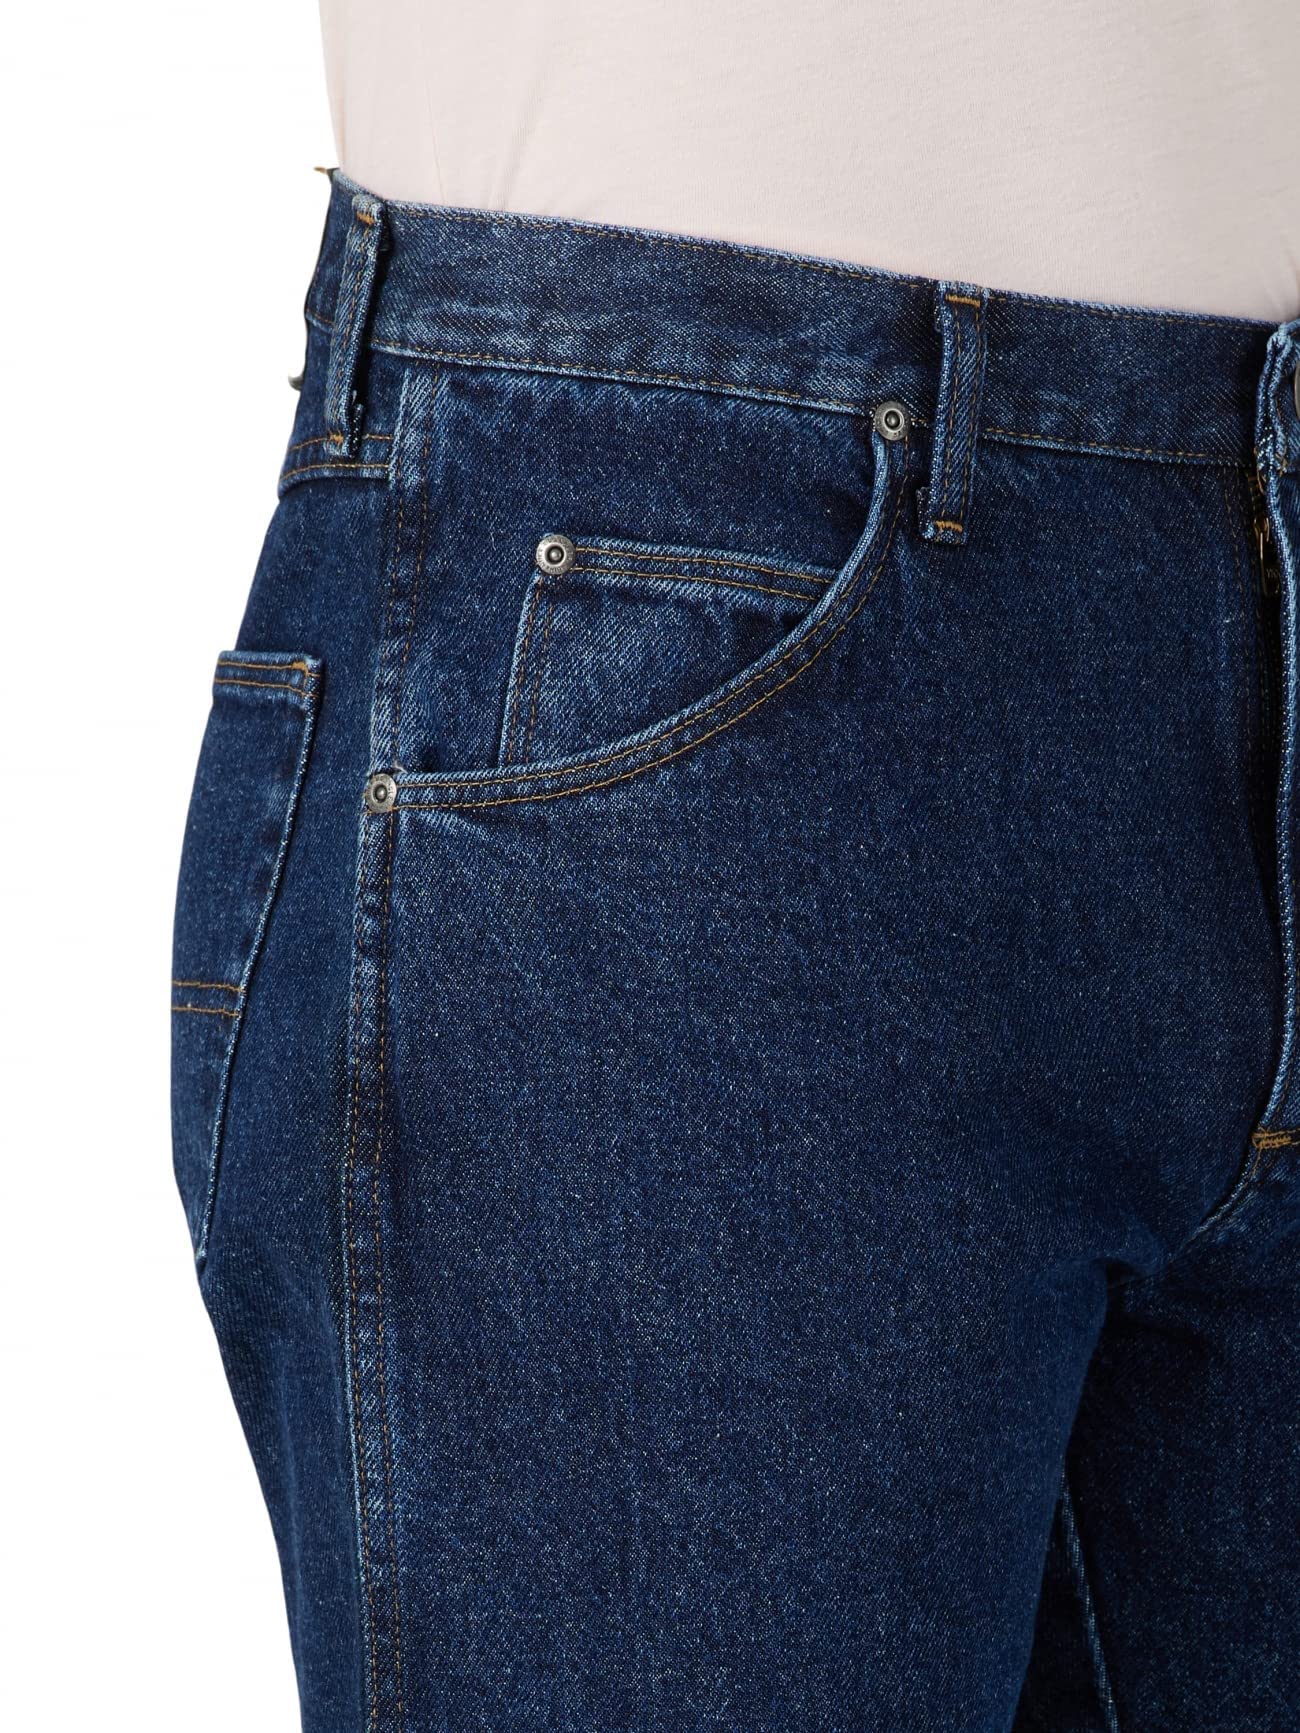 Wrangler Authentics Men's Classic 5-Pocket Regular Fit Cotton Jean, Dark Rinse, 30W x 29L